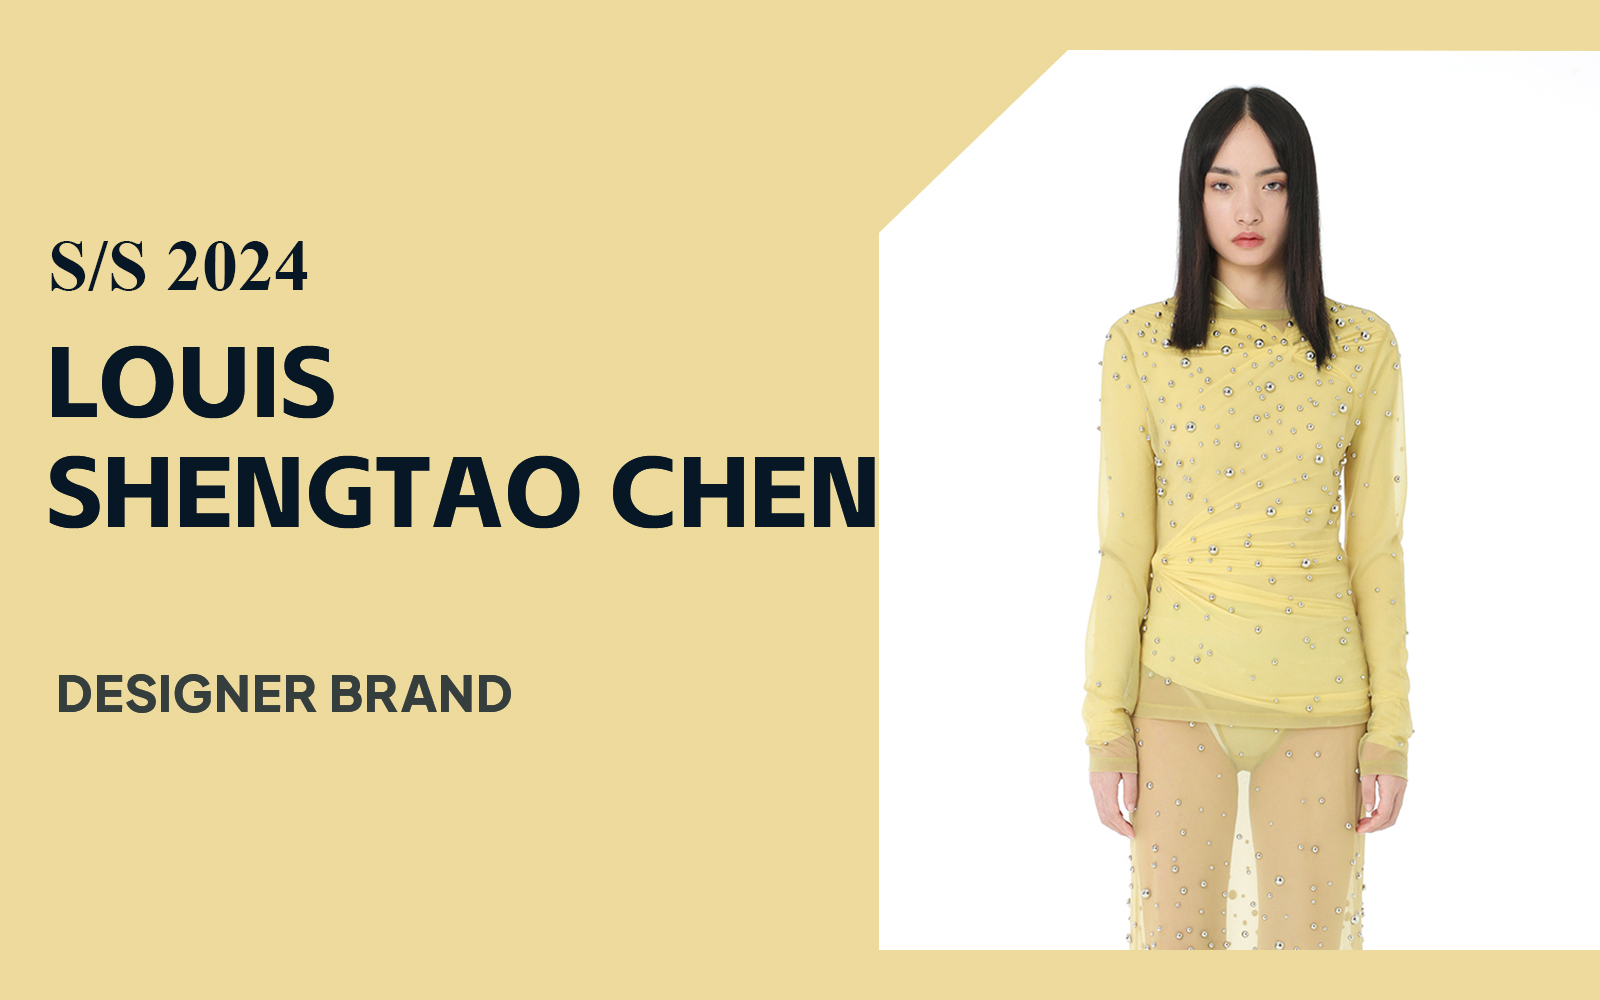 Practical Luxury - The Analysis of LOUIS SHENGTAO CHEN The Womenswear Designer Brand